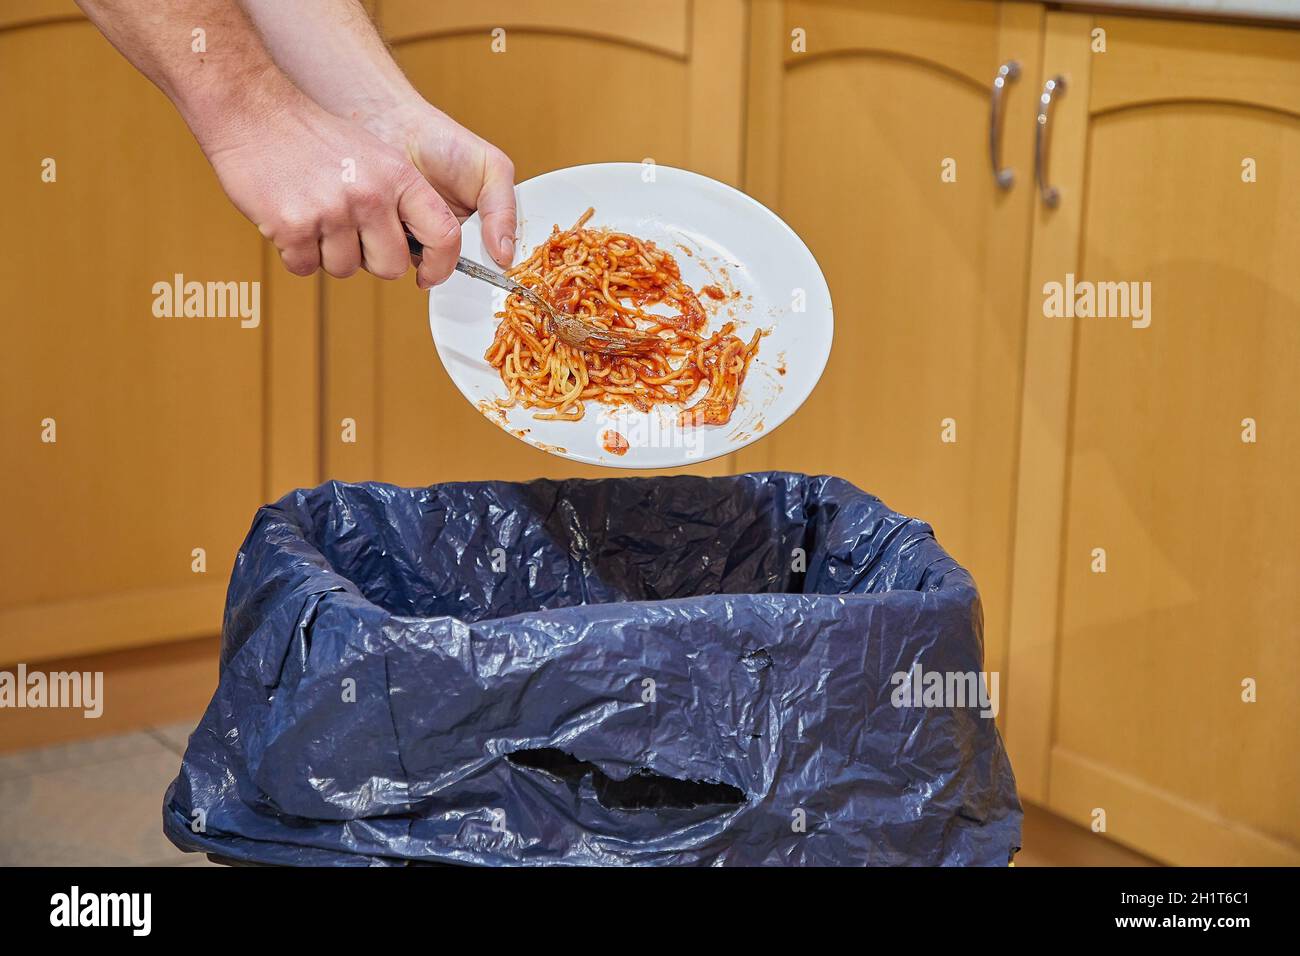 Food leftower thrown in the kitchen garbage bin, food waste problem Stock  Photo - Alamy